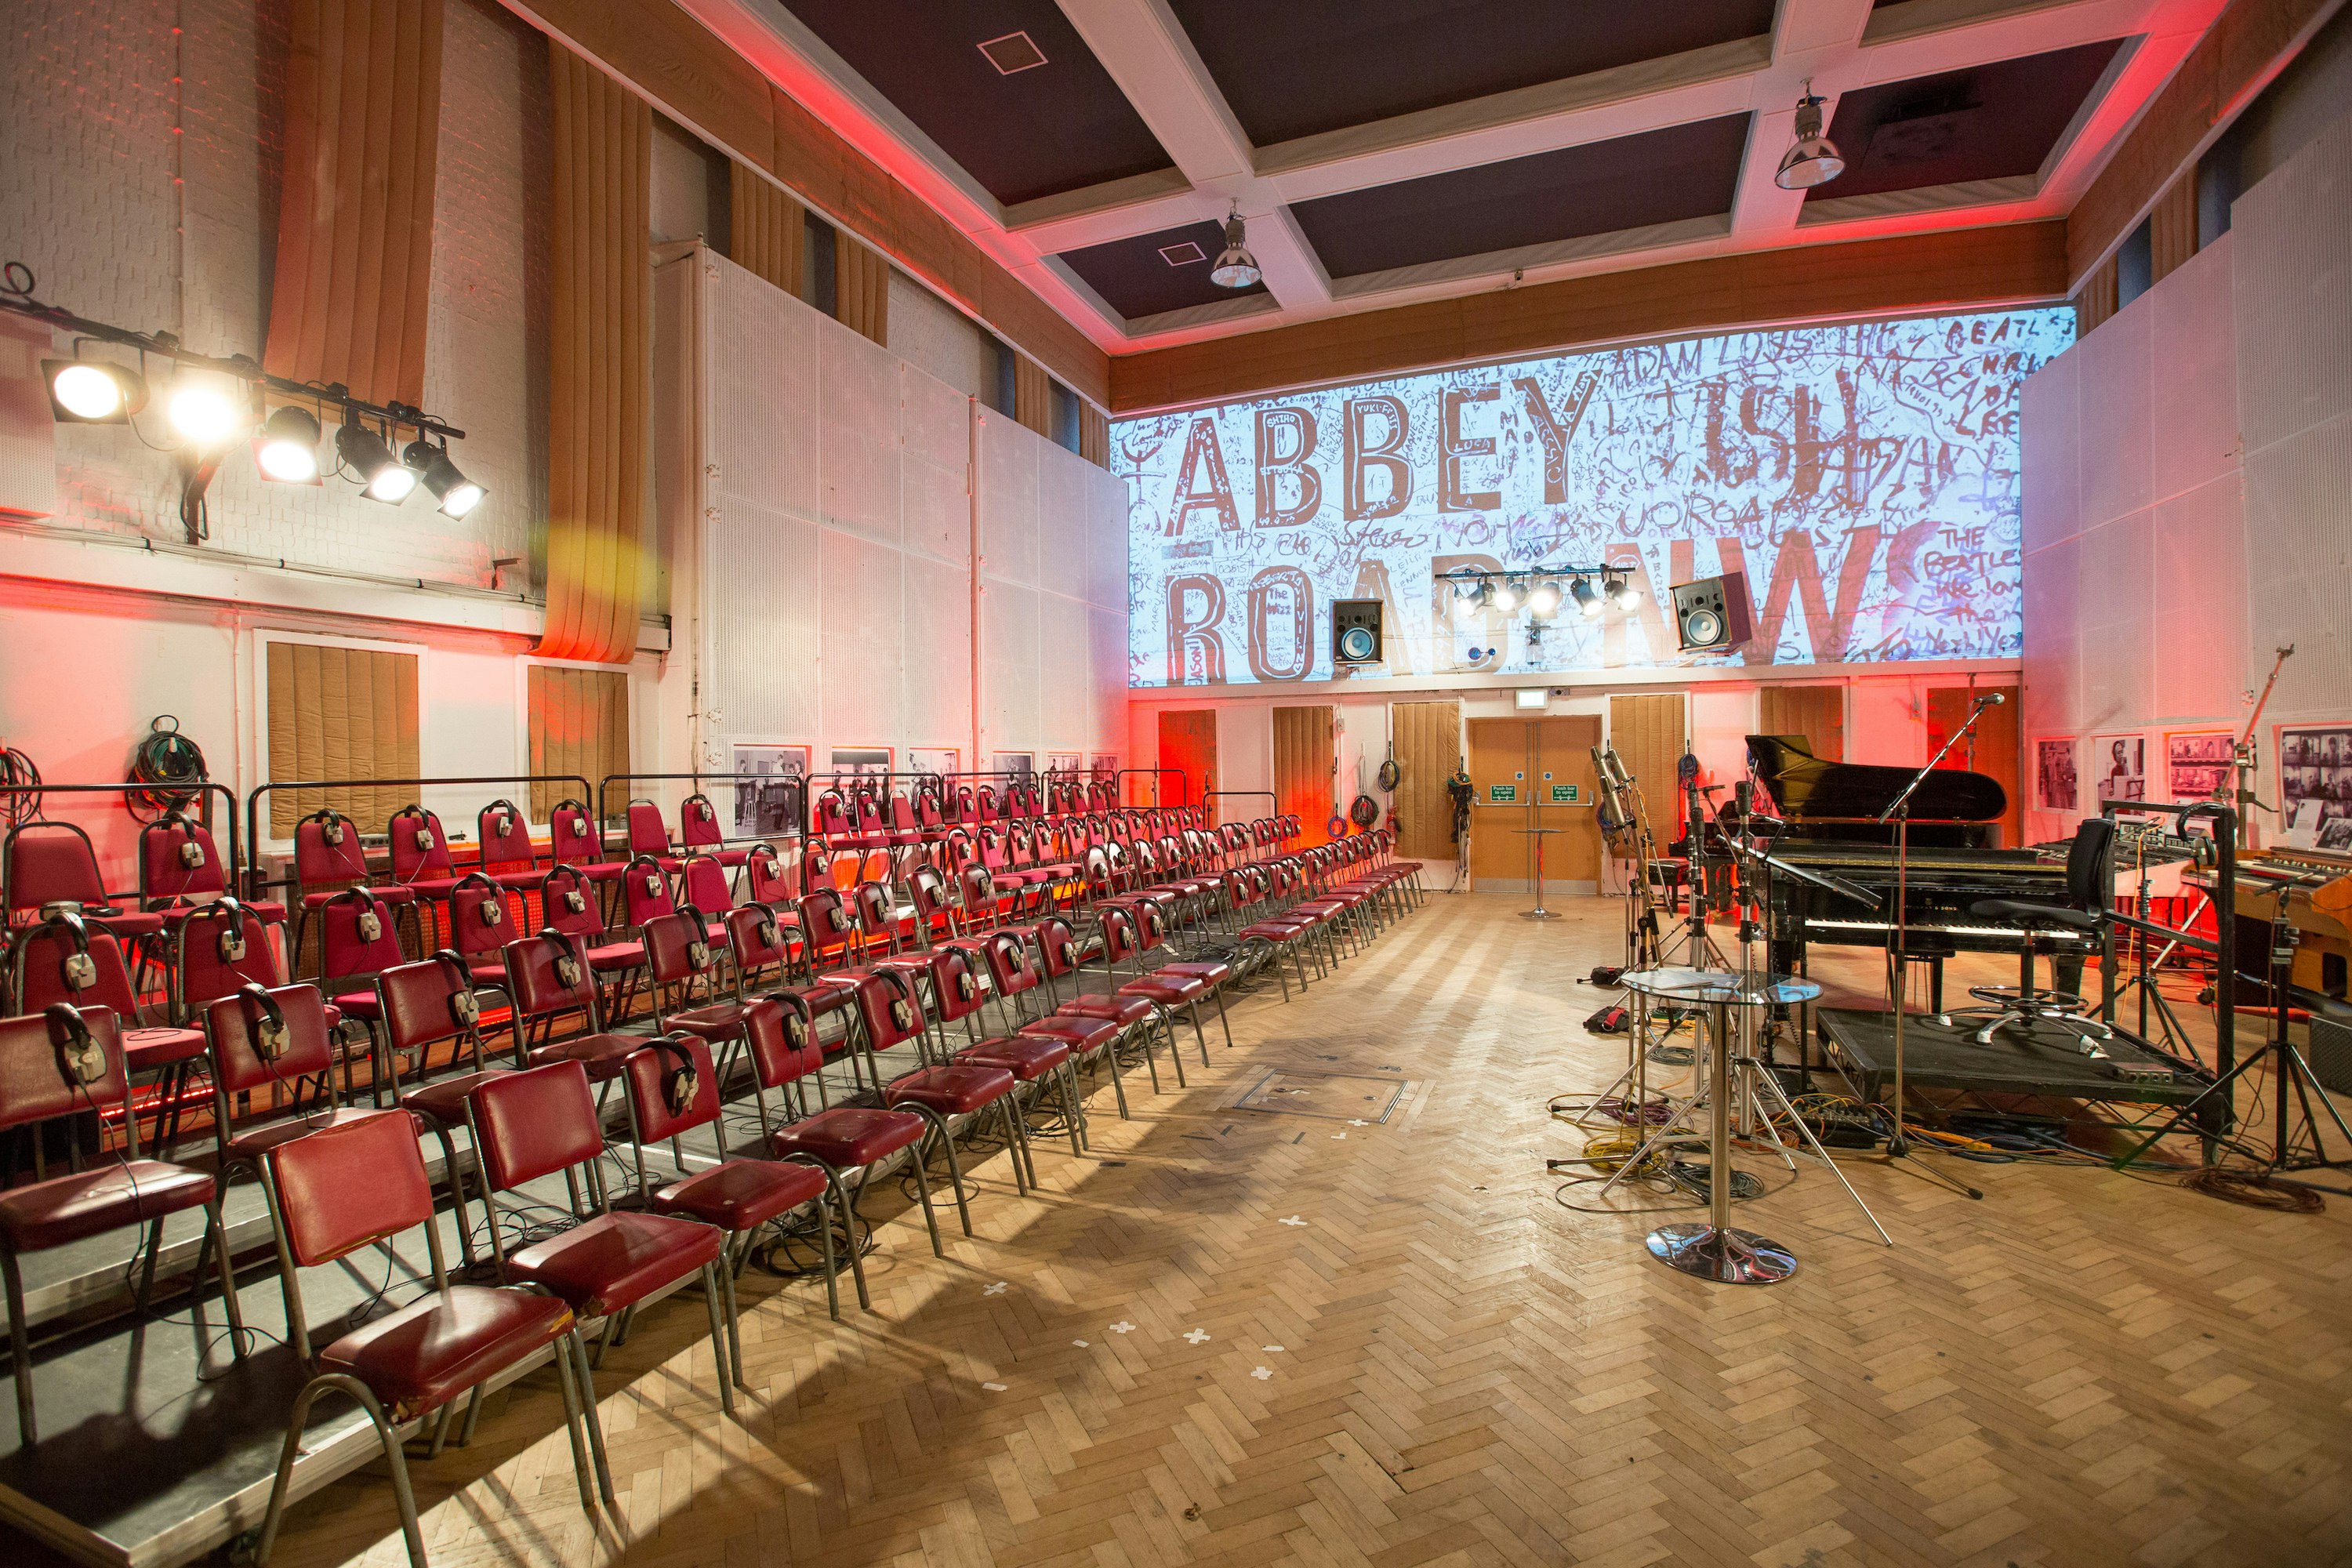 Studio Two at Abbey Road Studios